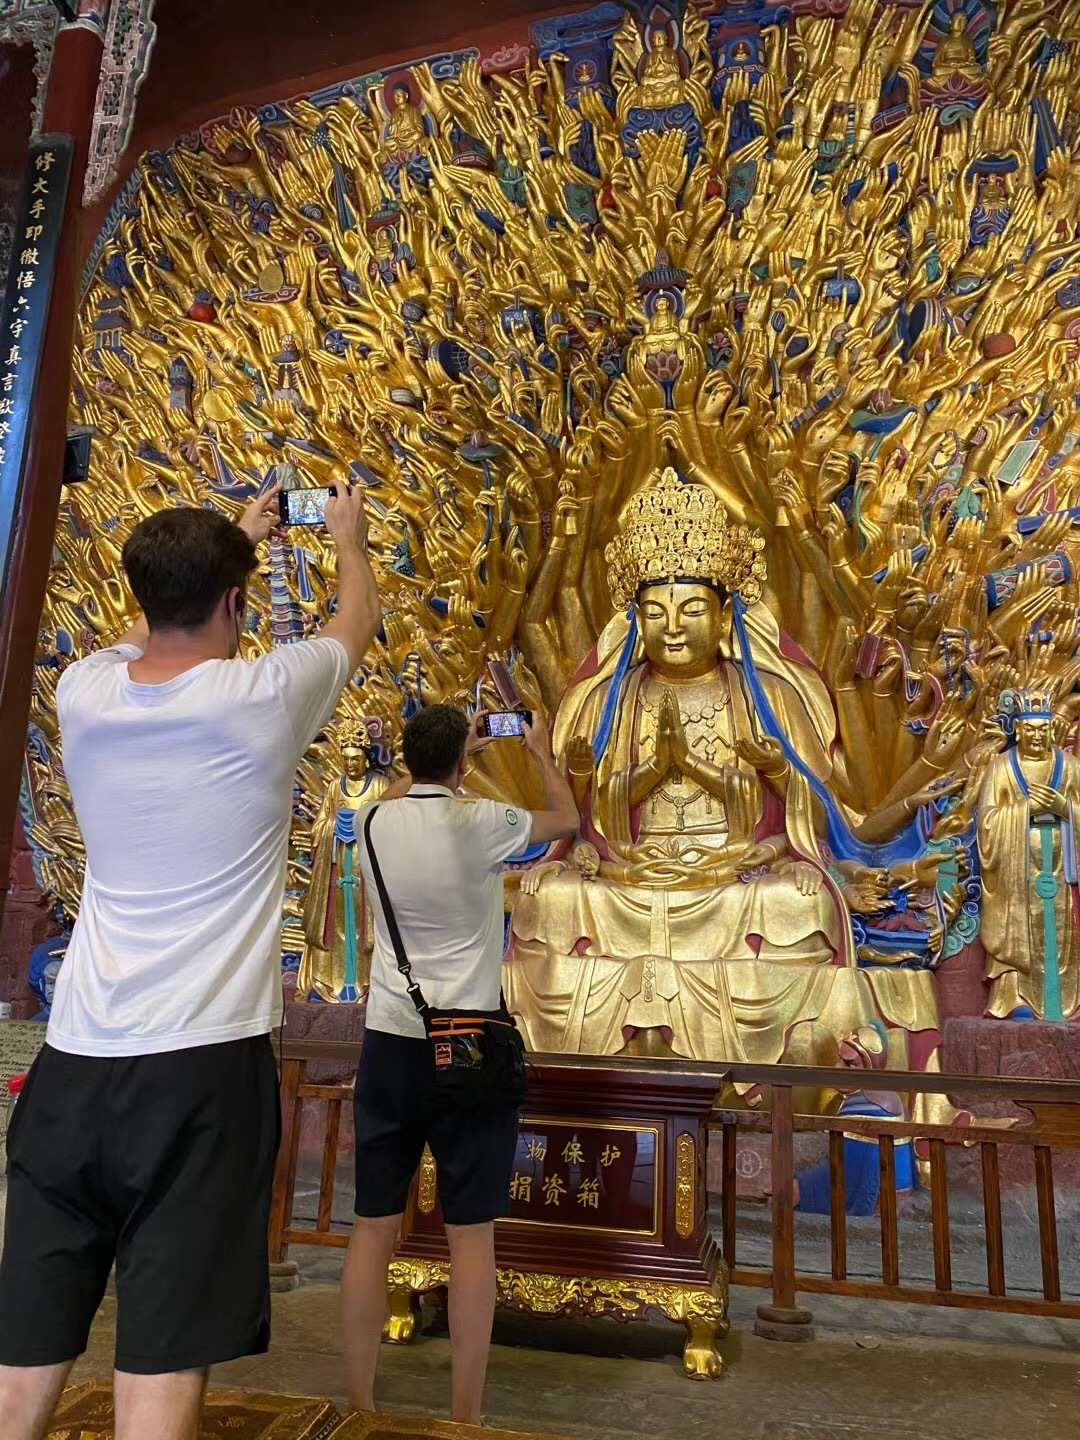 Barrett took photos of the Thousand Hands Buddha in Dazu Rock Carvings